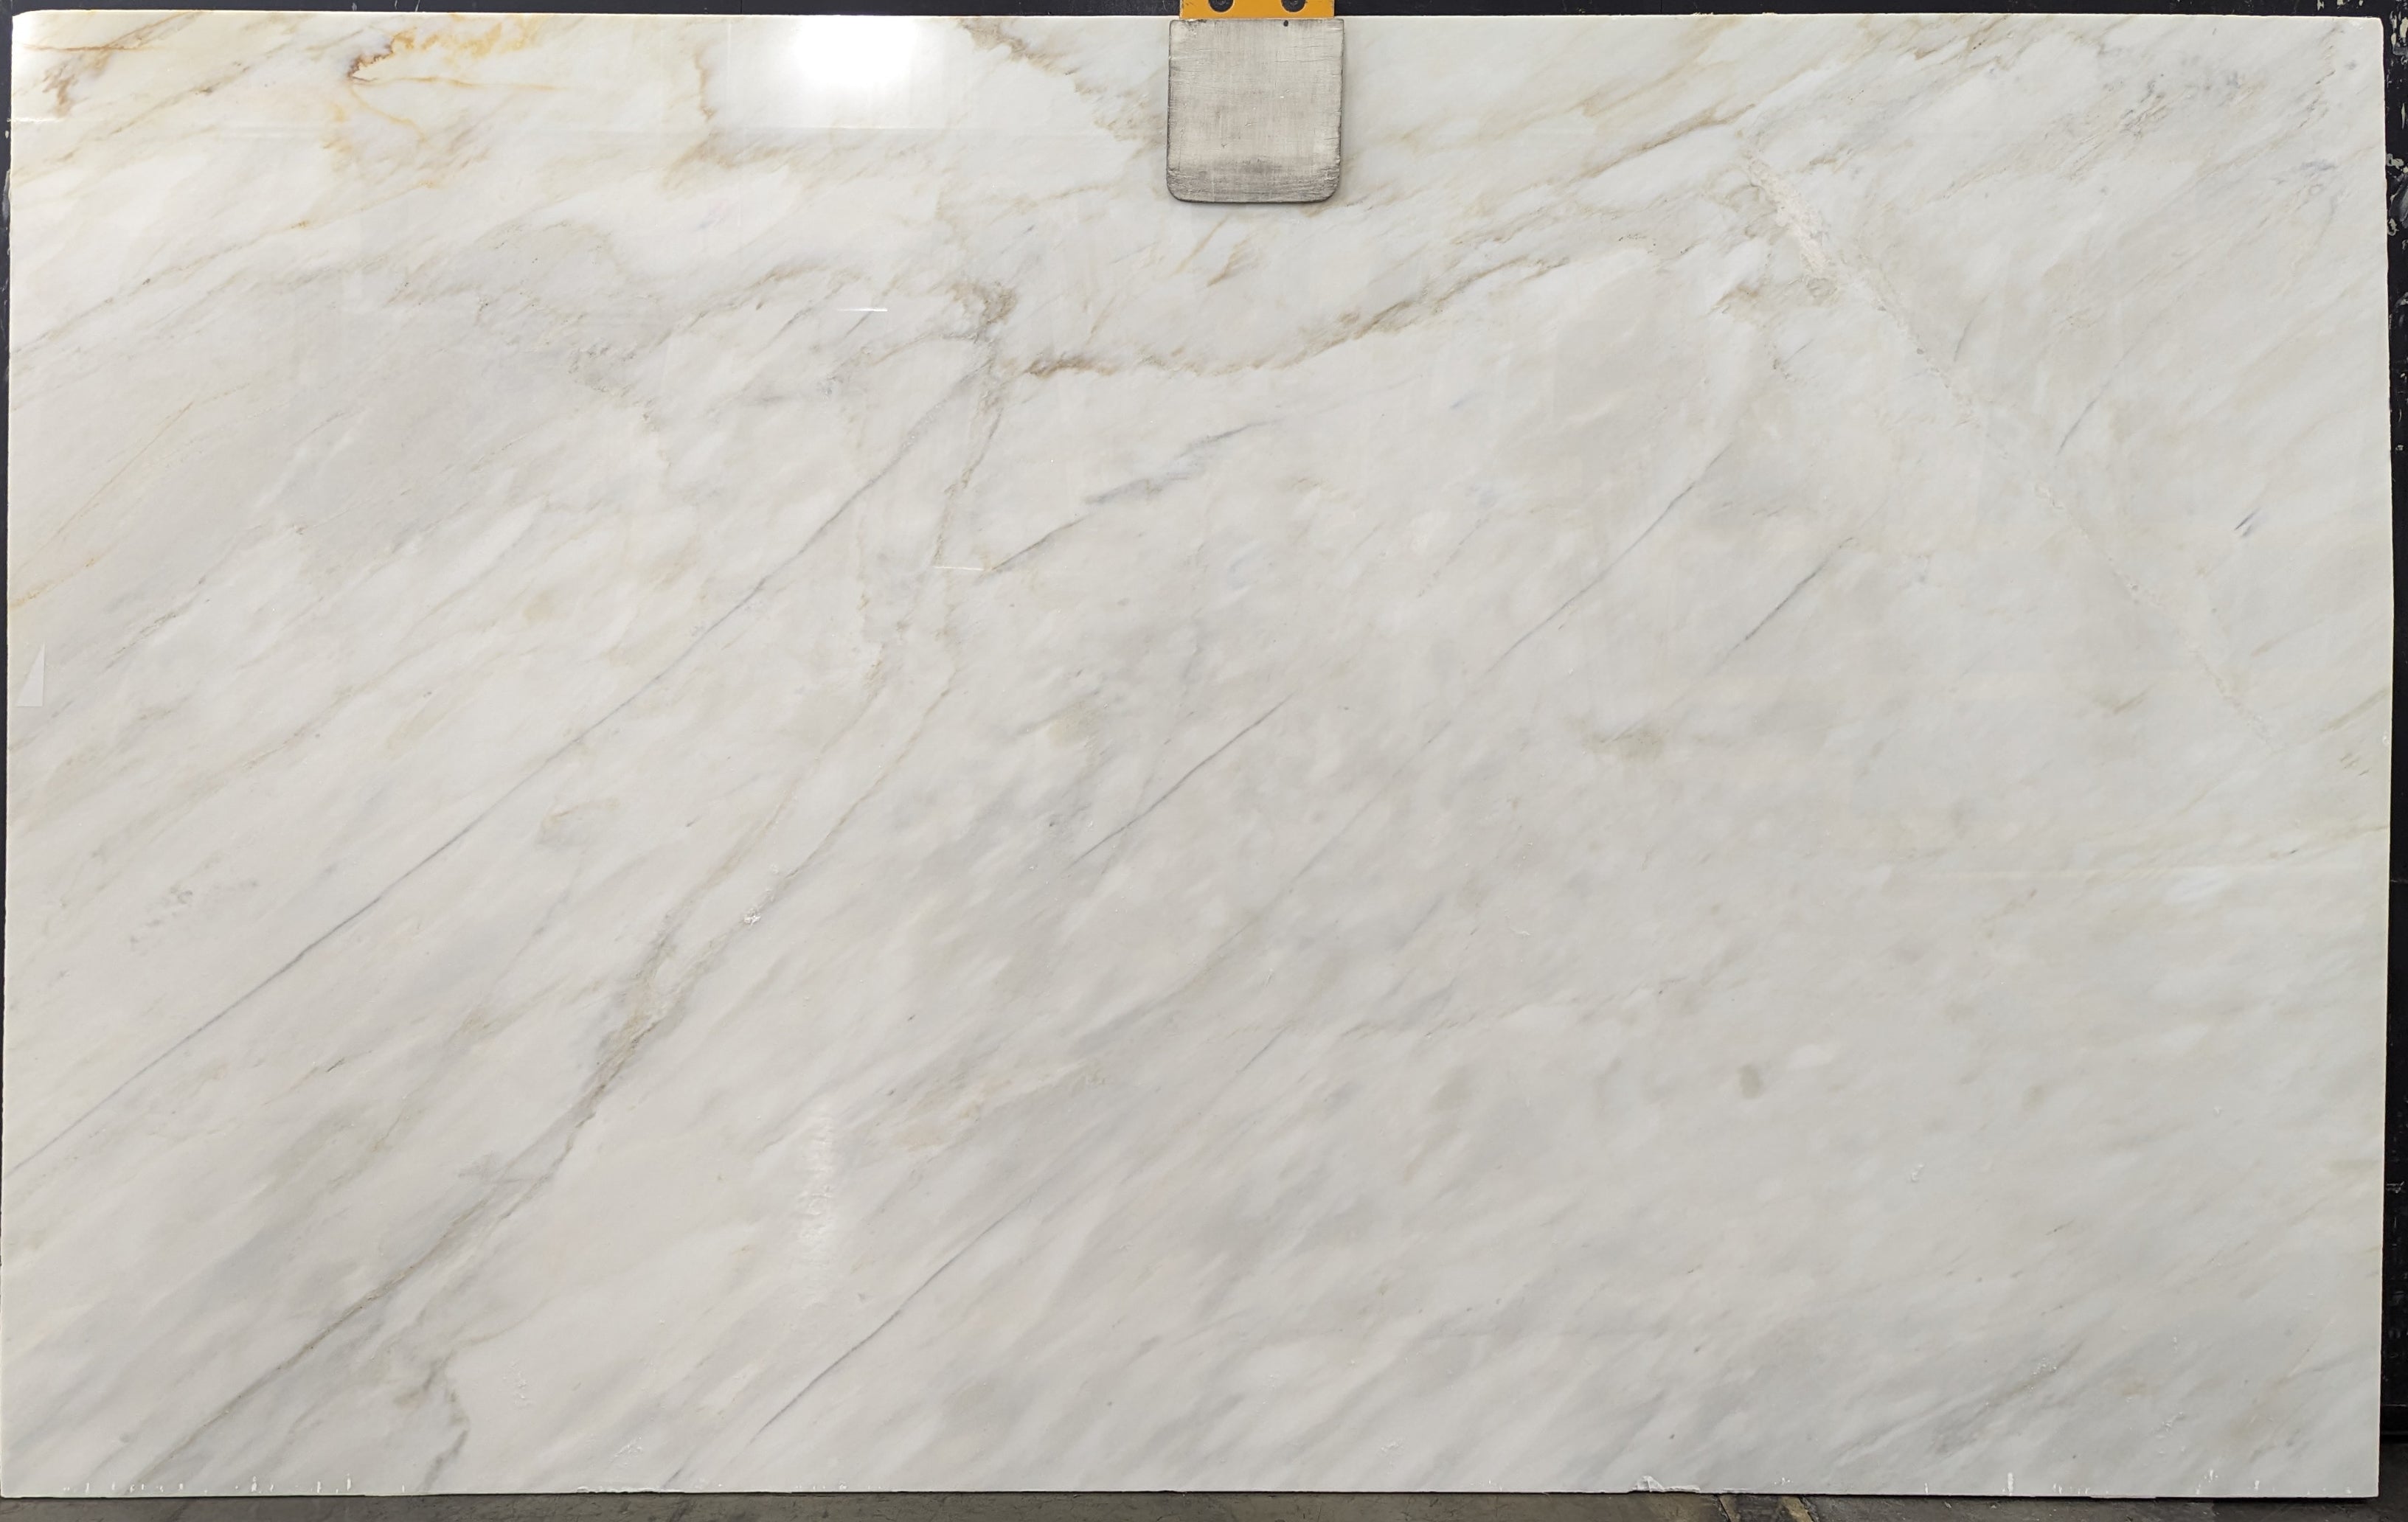  Calacatta Cremo Marble Slab 3/4  Polished Stone - 11726#26 -  69X113 